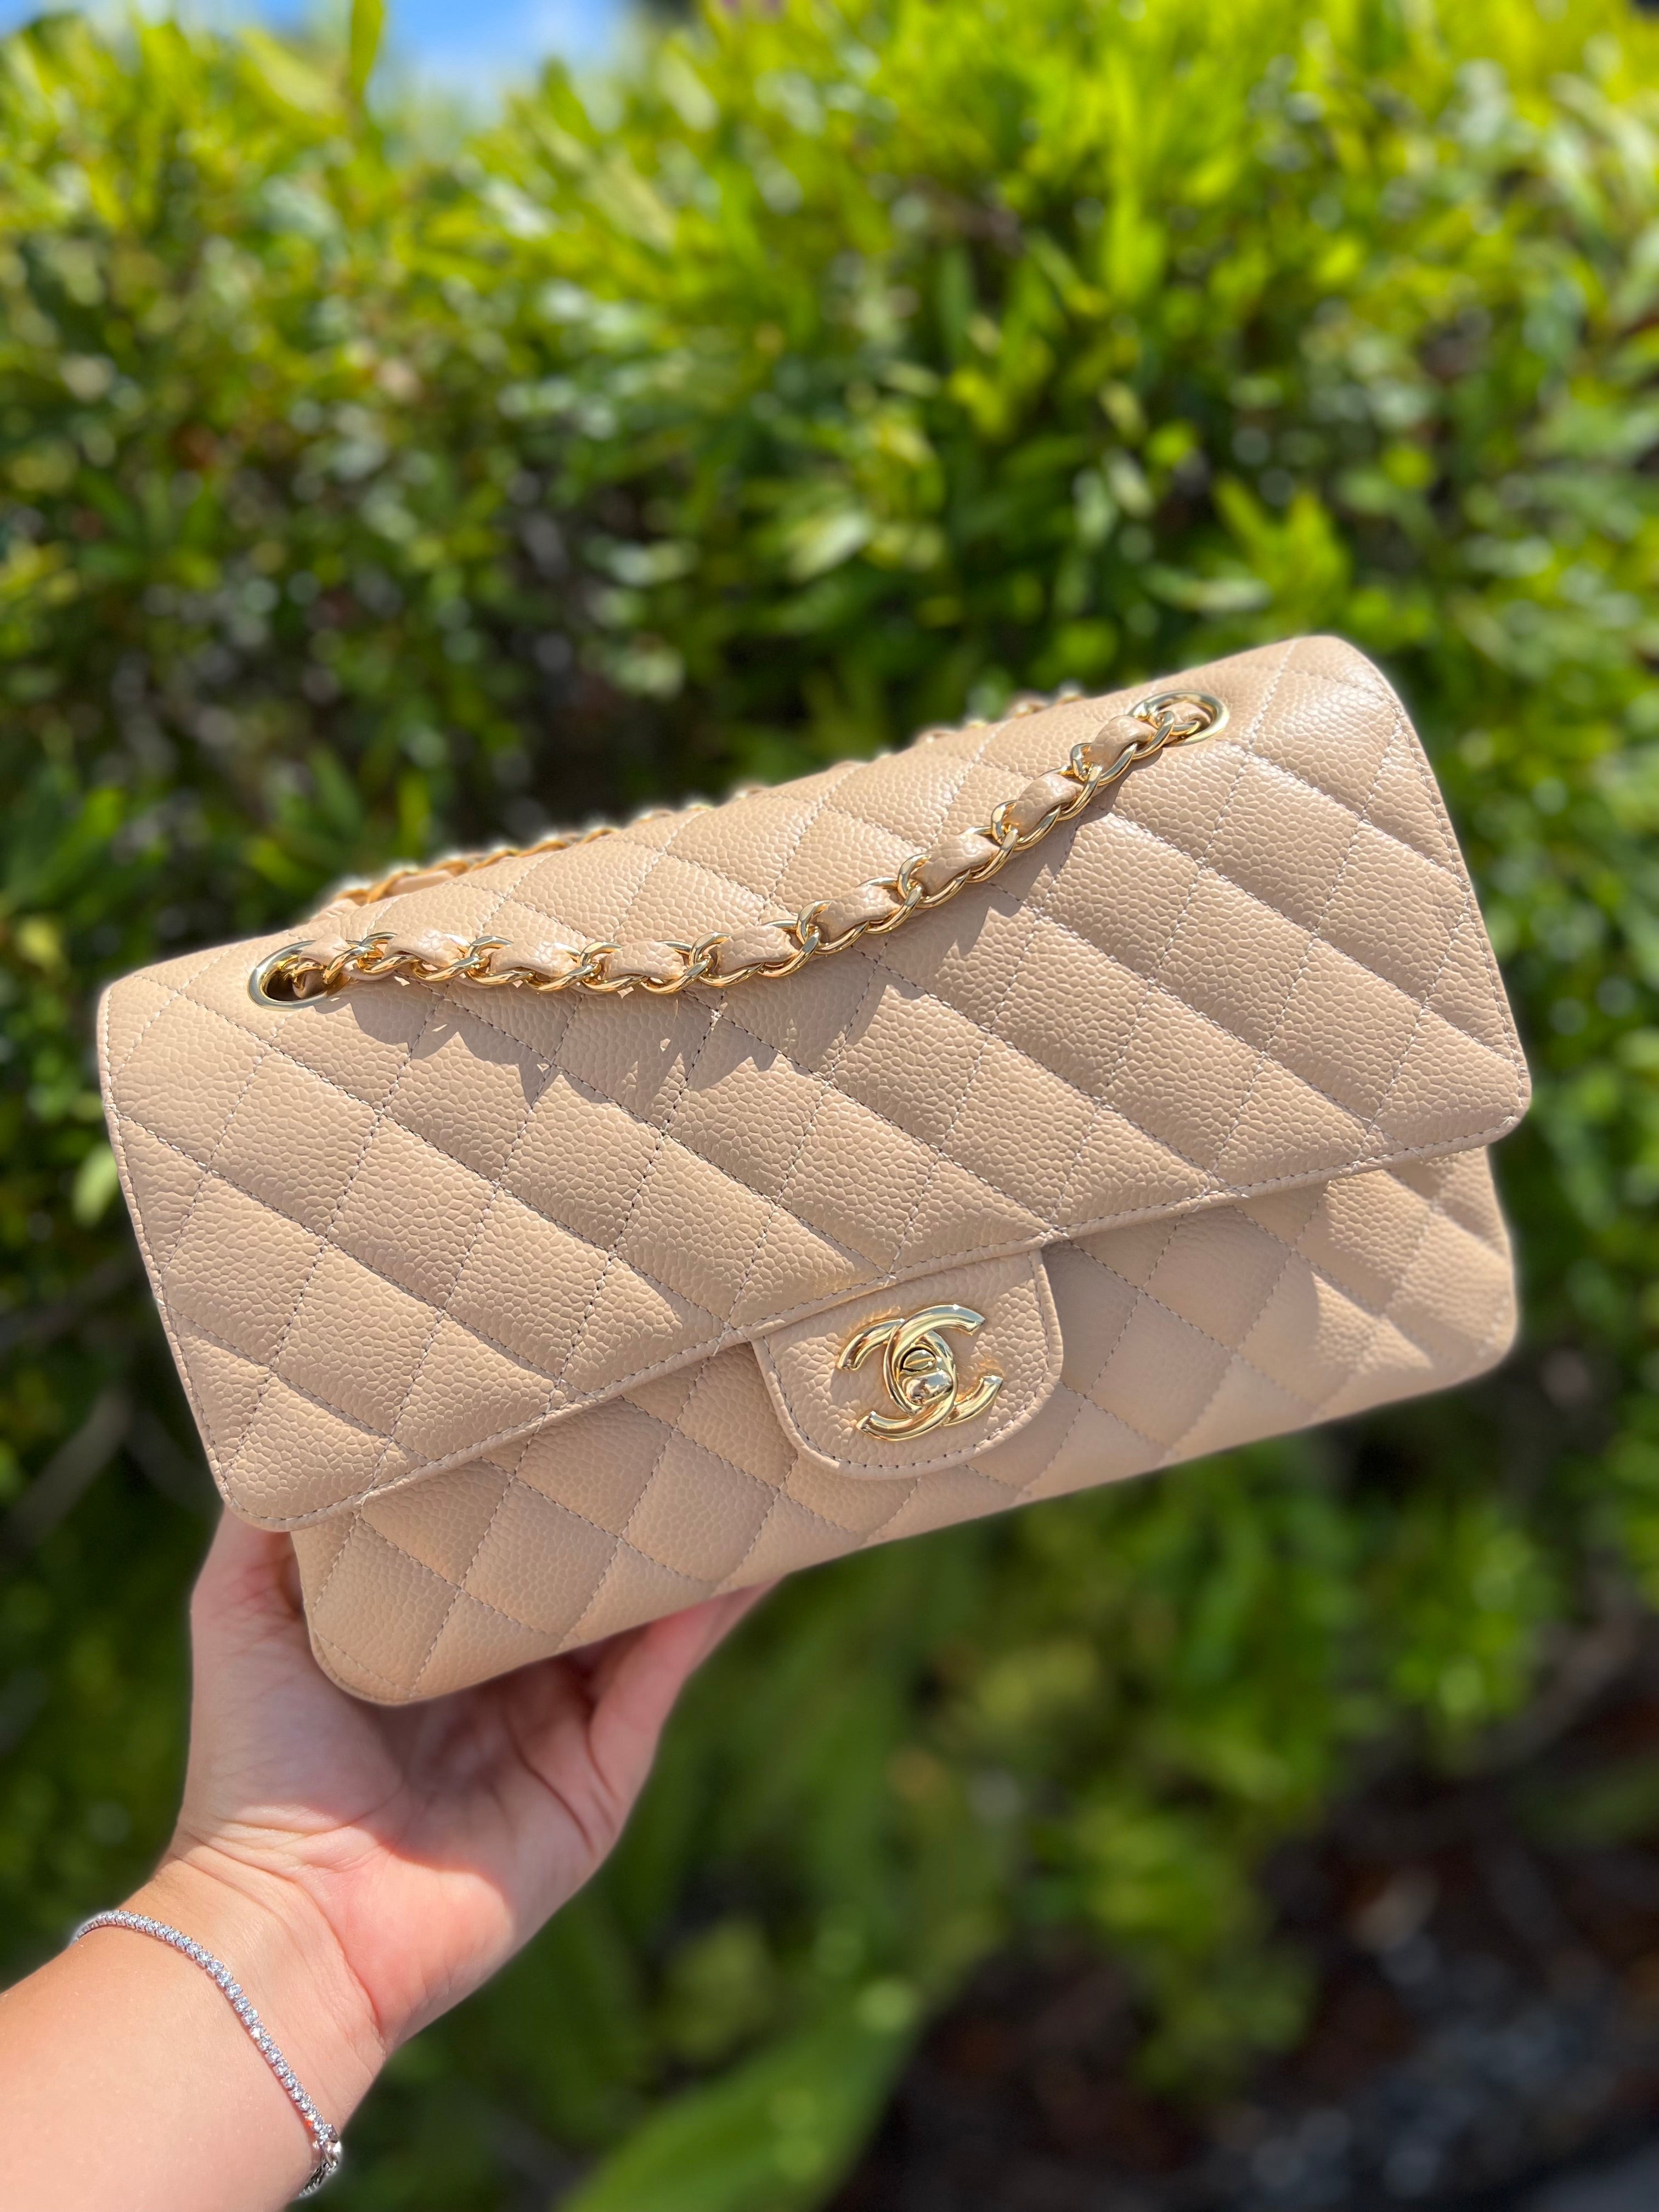 Chanel Medium Double Flap Classic Flap Bag Green Leather - Allu USA